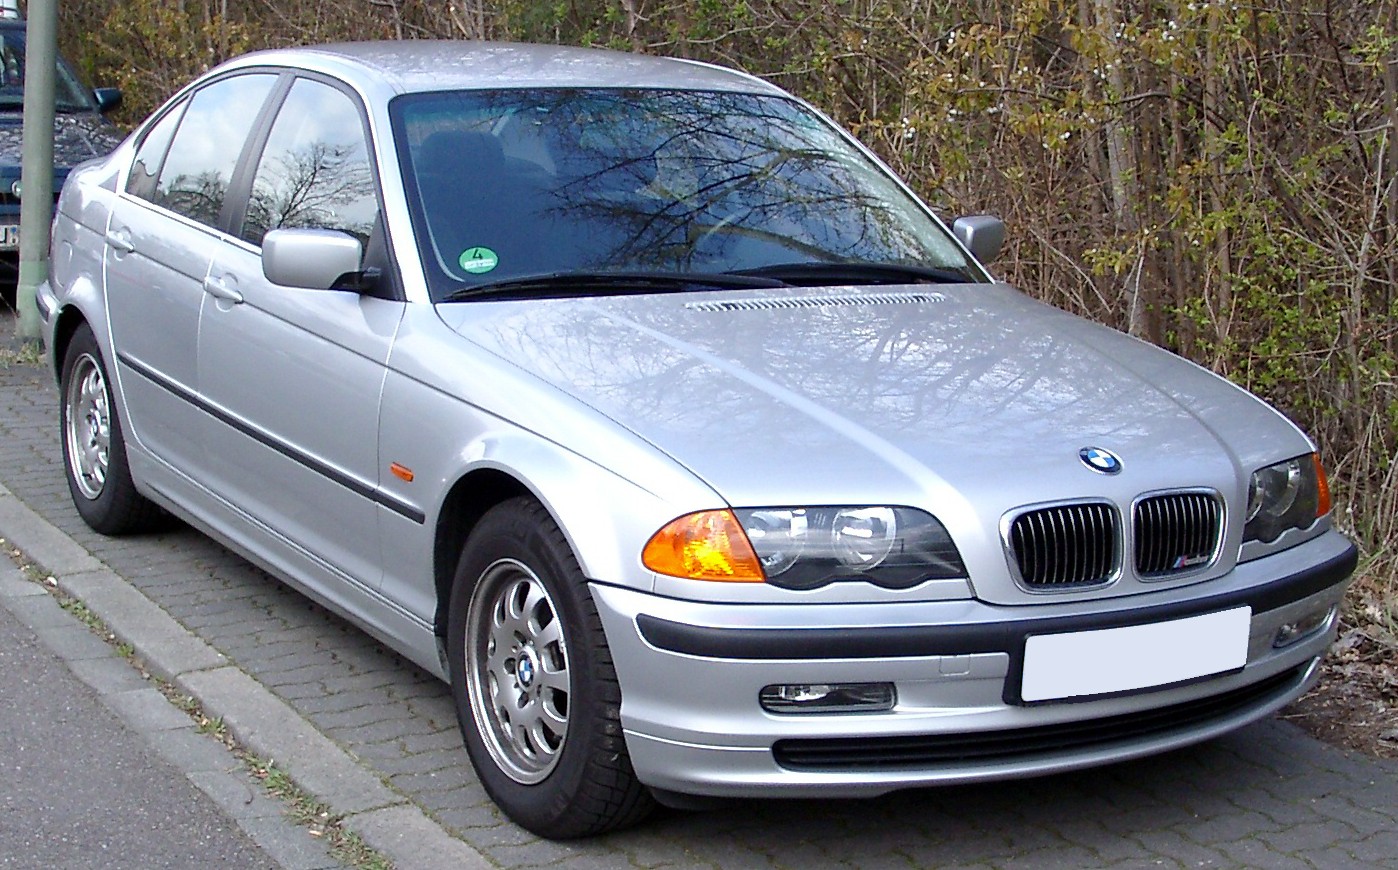 BMW_E46_front_20080328